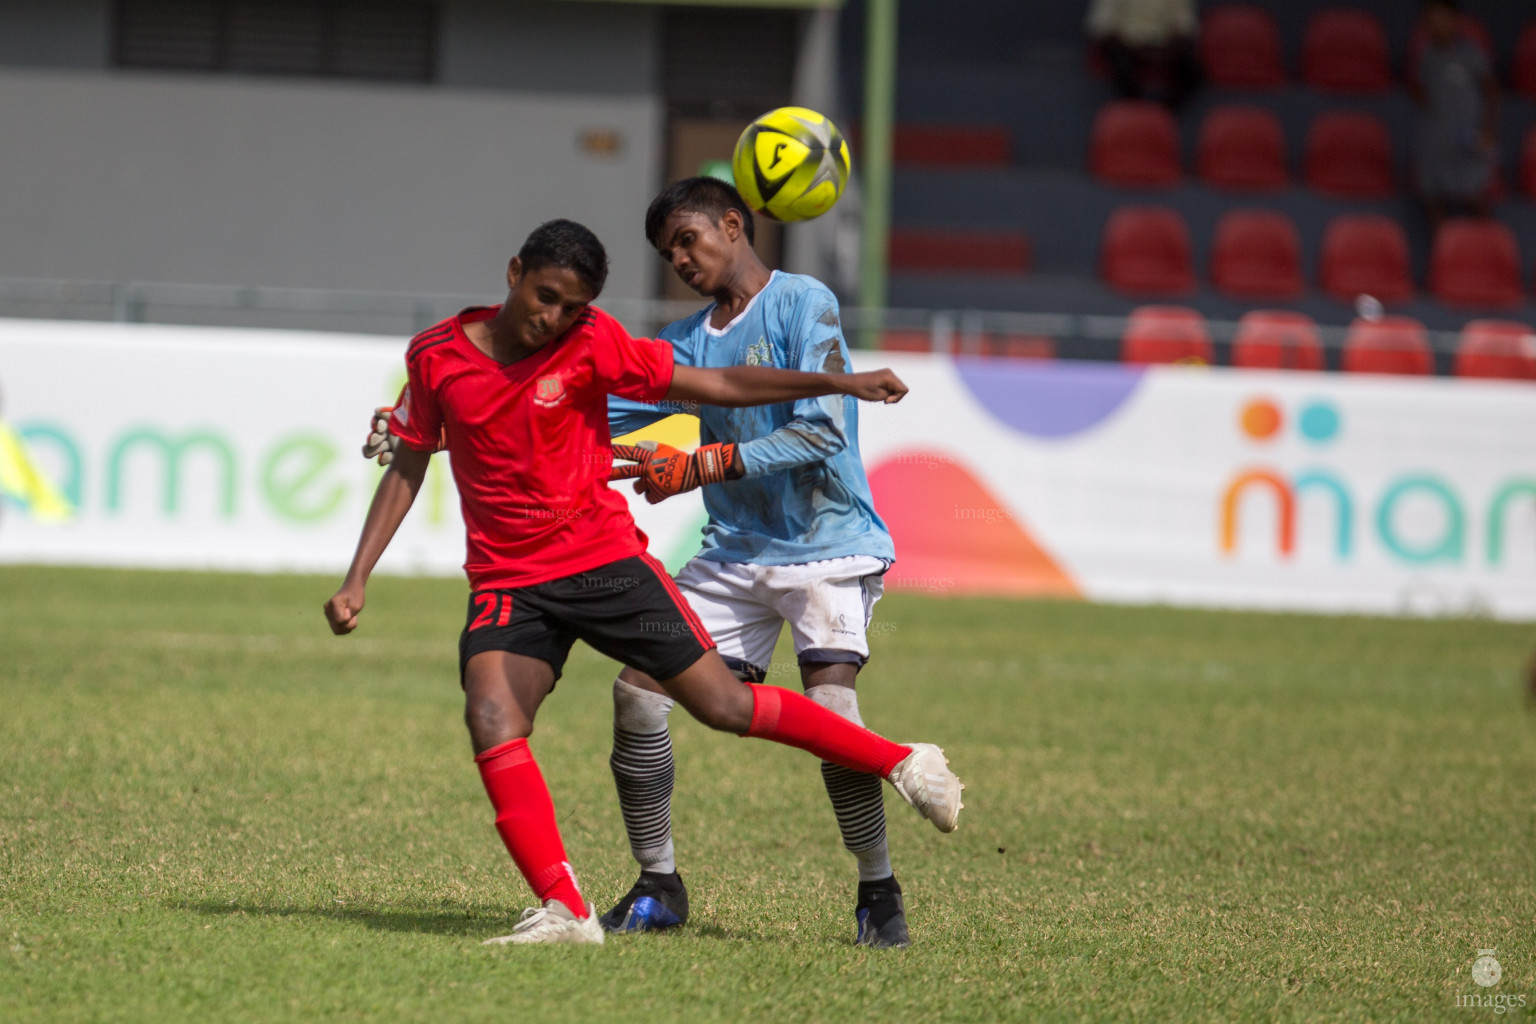 Majeedhiyya School vs Aminiya School in Mamen Inter-School Football Tournament 2019 (U15) on 4th March 2019, Sunday in Male' Maldives (Images.mv Photo: Suadh Abdul Sattar)